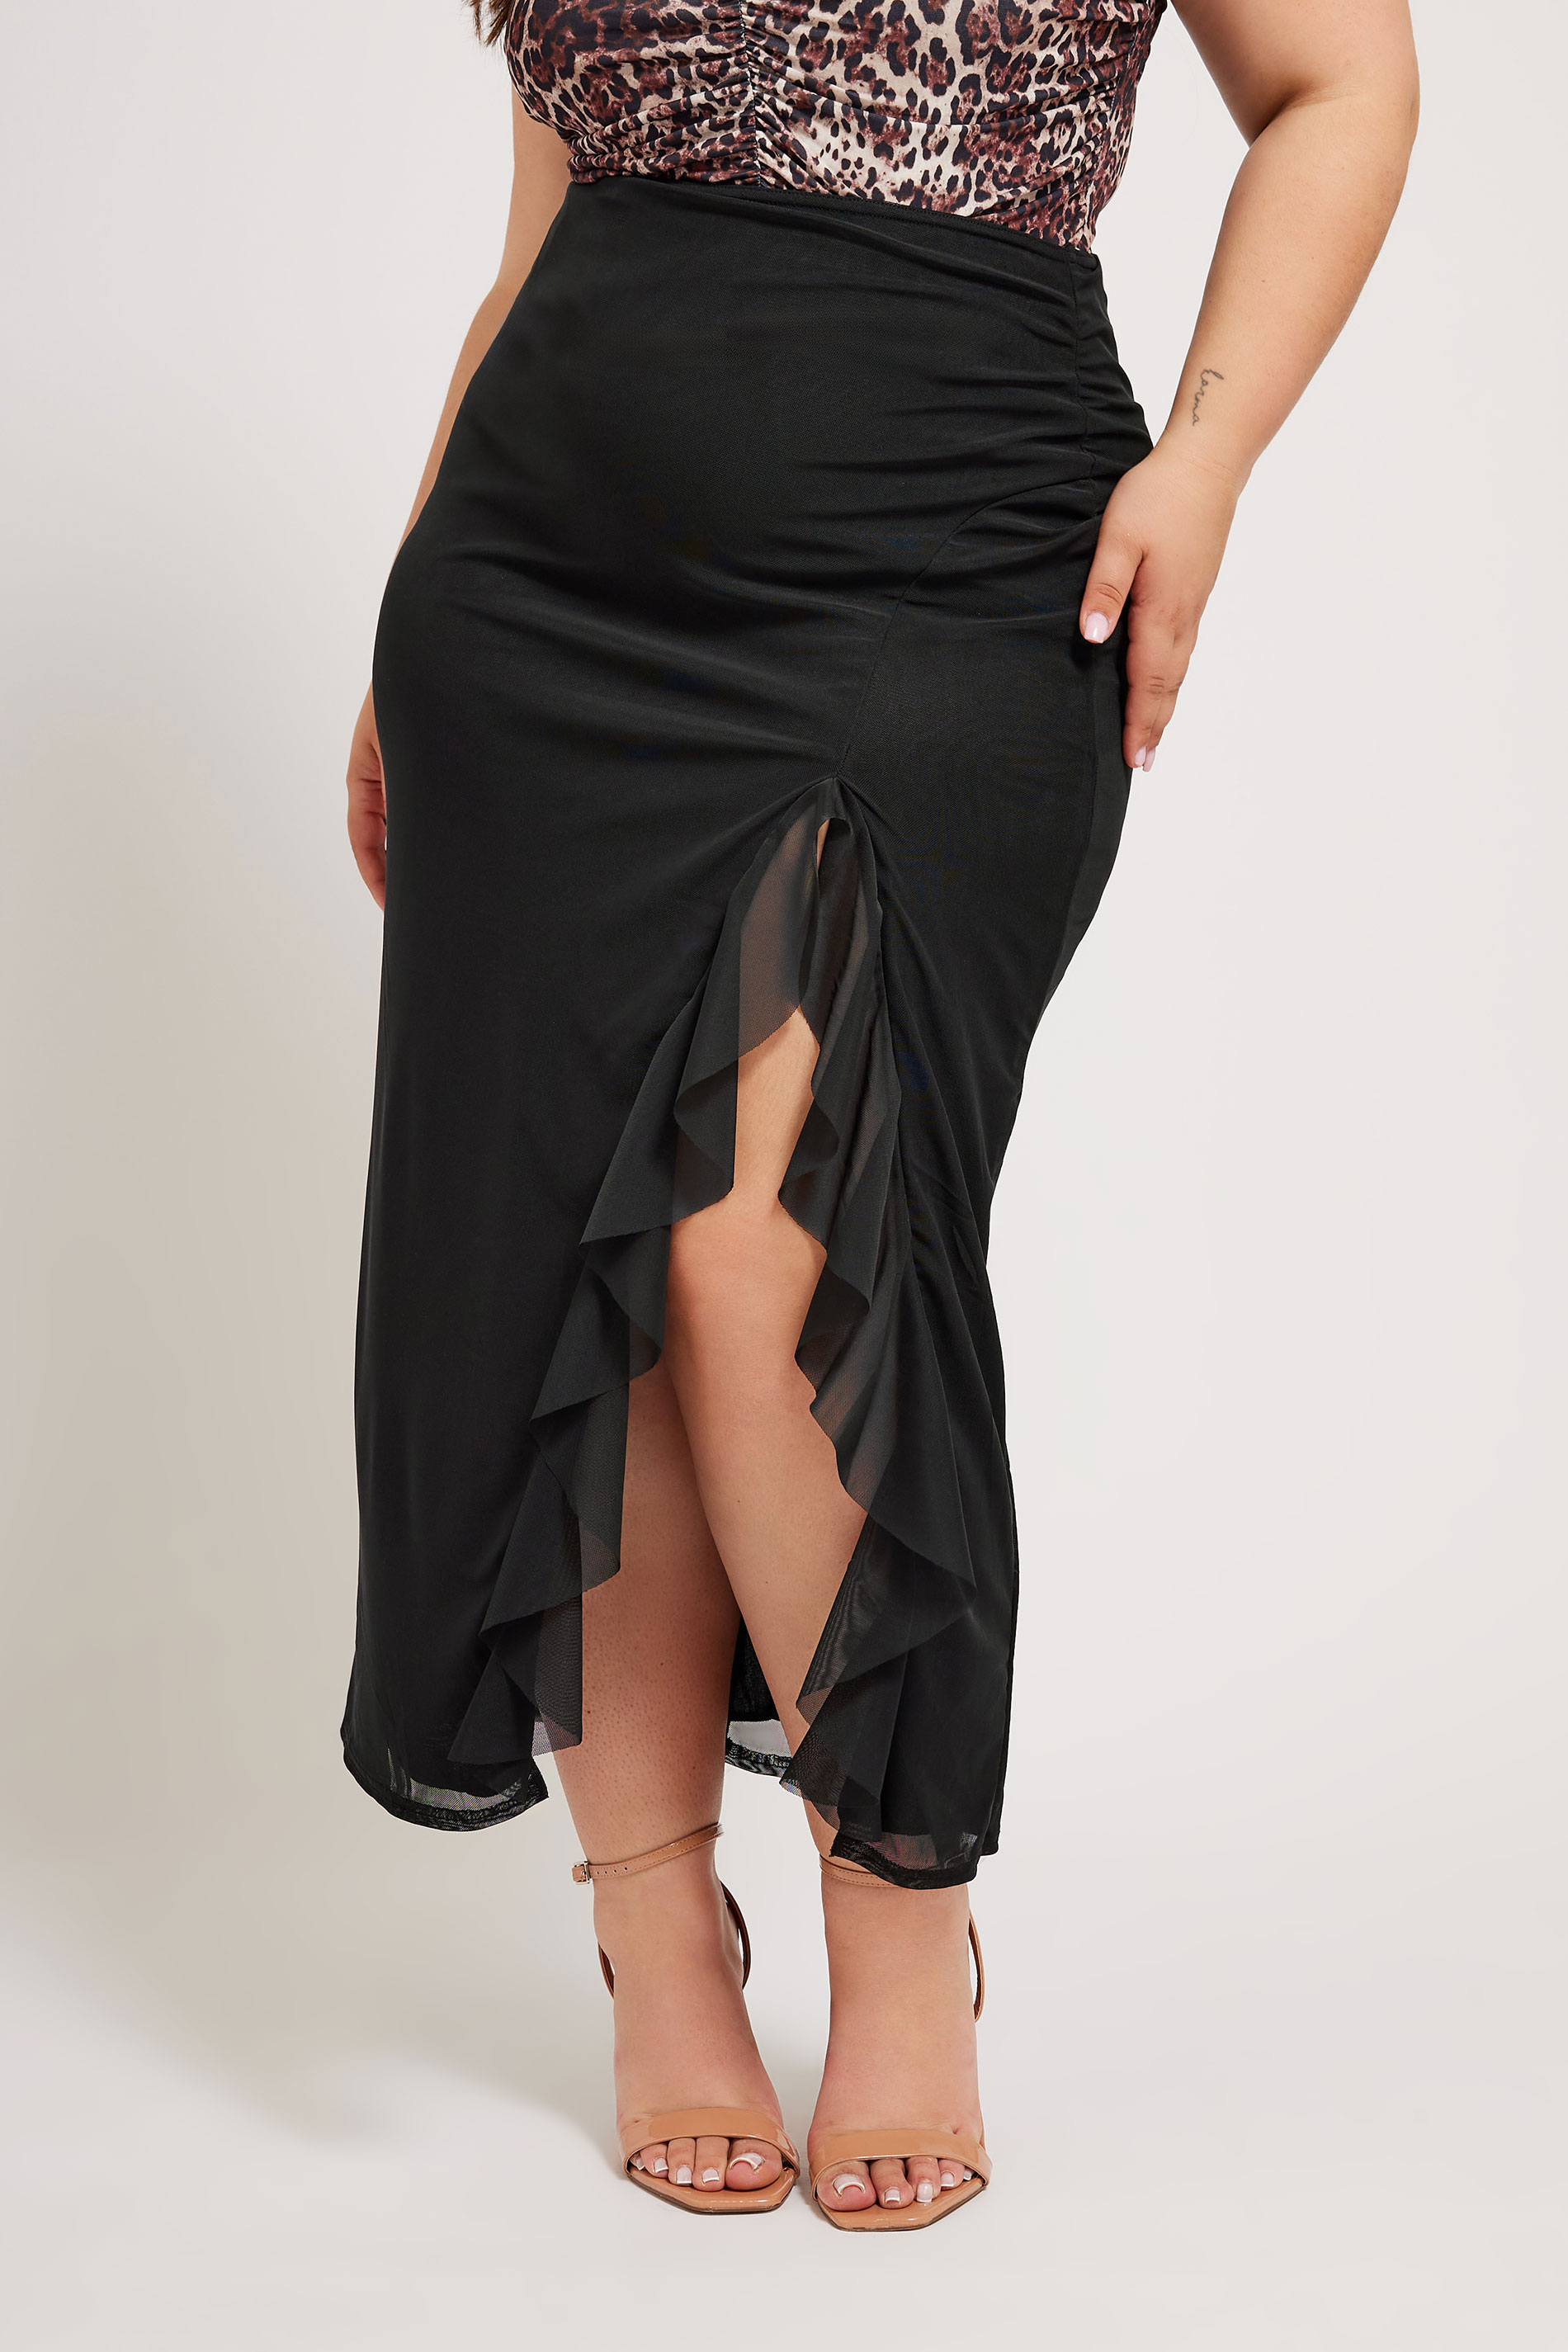 YOURS LONDON Plus Size Black Ruffle Maxi Skirt | Yours Clothing 1